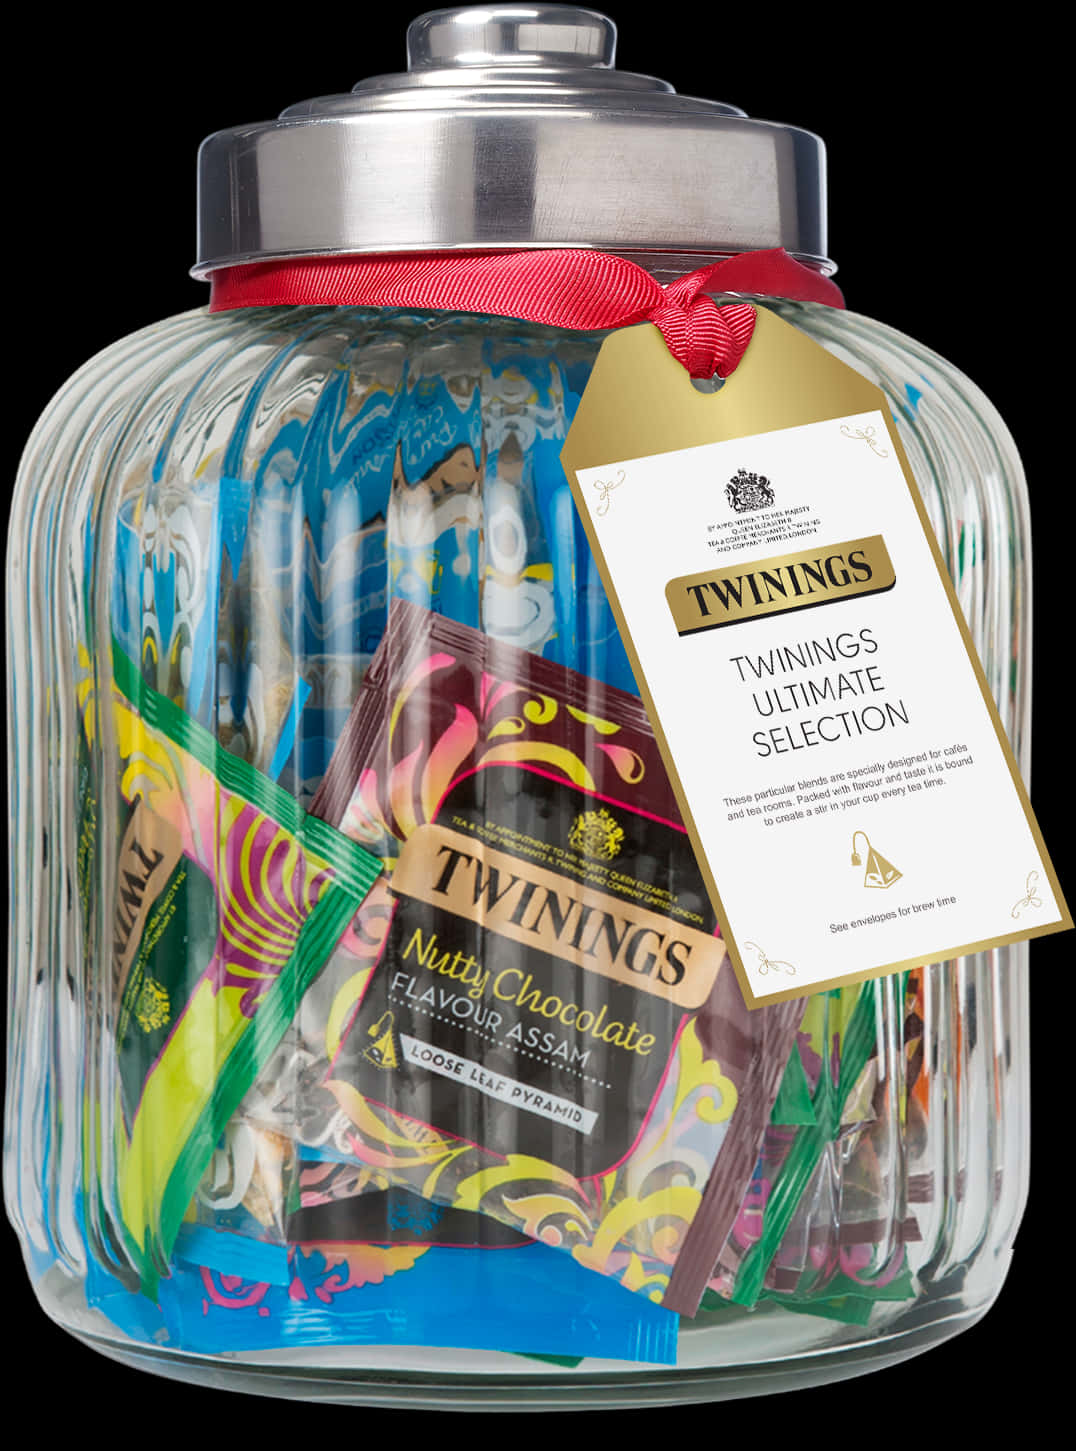 Twinings Tea Selectionin Glass Jar